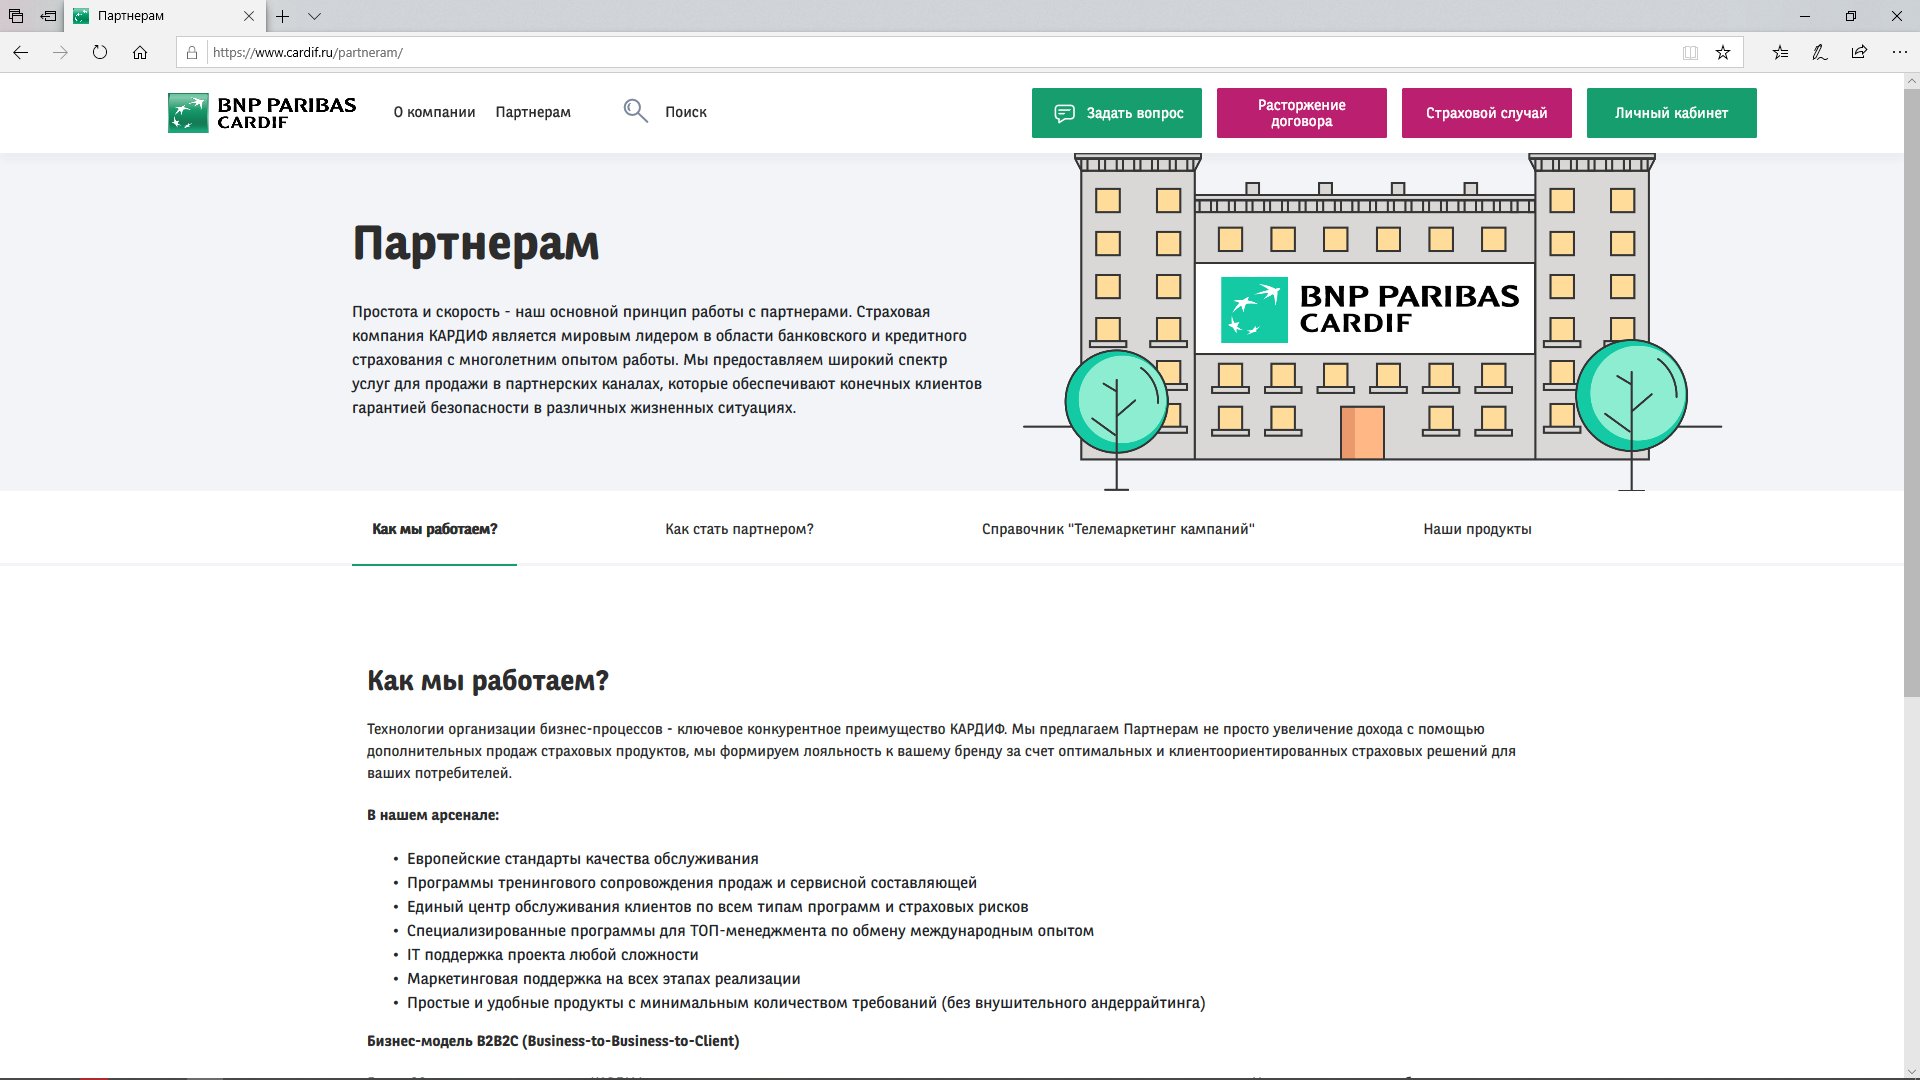 Кардиф страховая компания сайт. Сайт страховой компании Кардиф Москва.